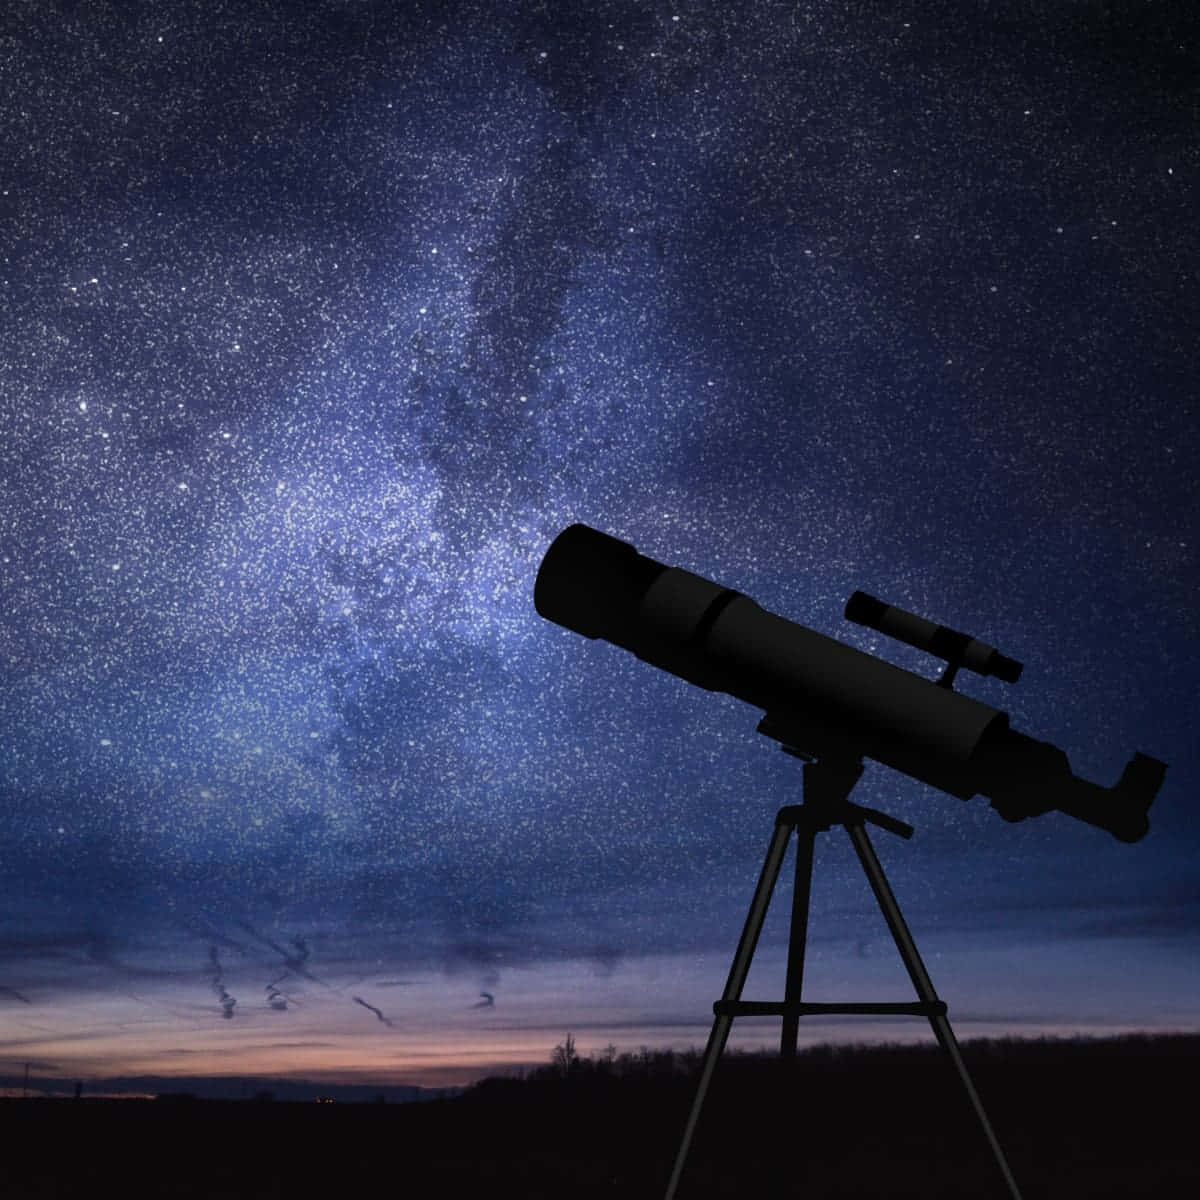 Astronomischesteleskop Gegen Den Himmel Mit Sternen Wallpaper